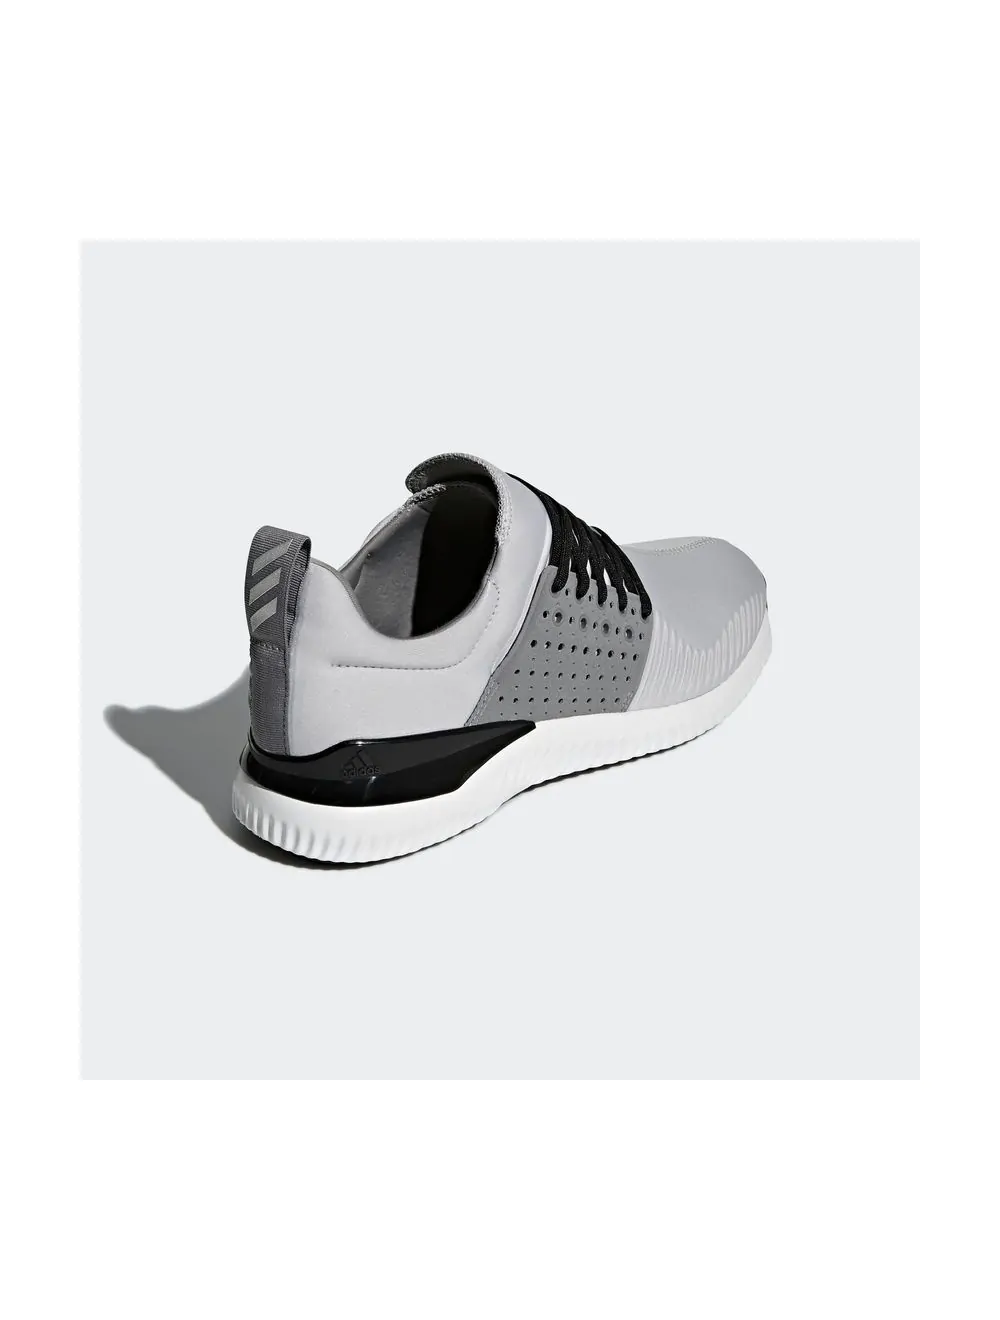 adidas Adicross Bounce Golf Shoes - Light Solid Grey/Grey Three/Core Black